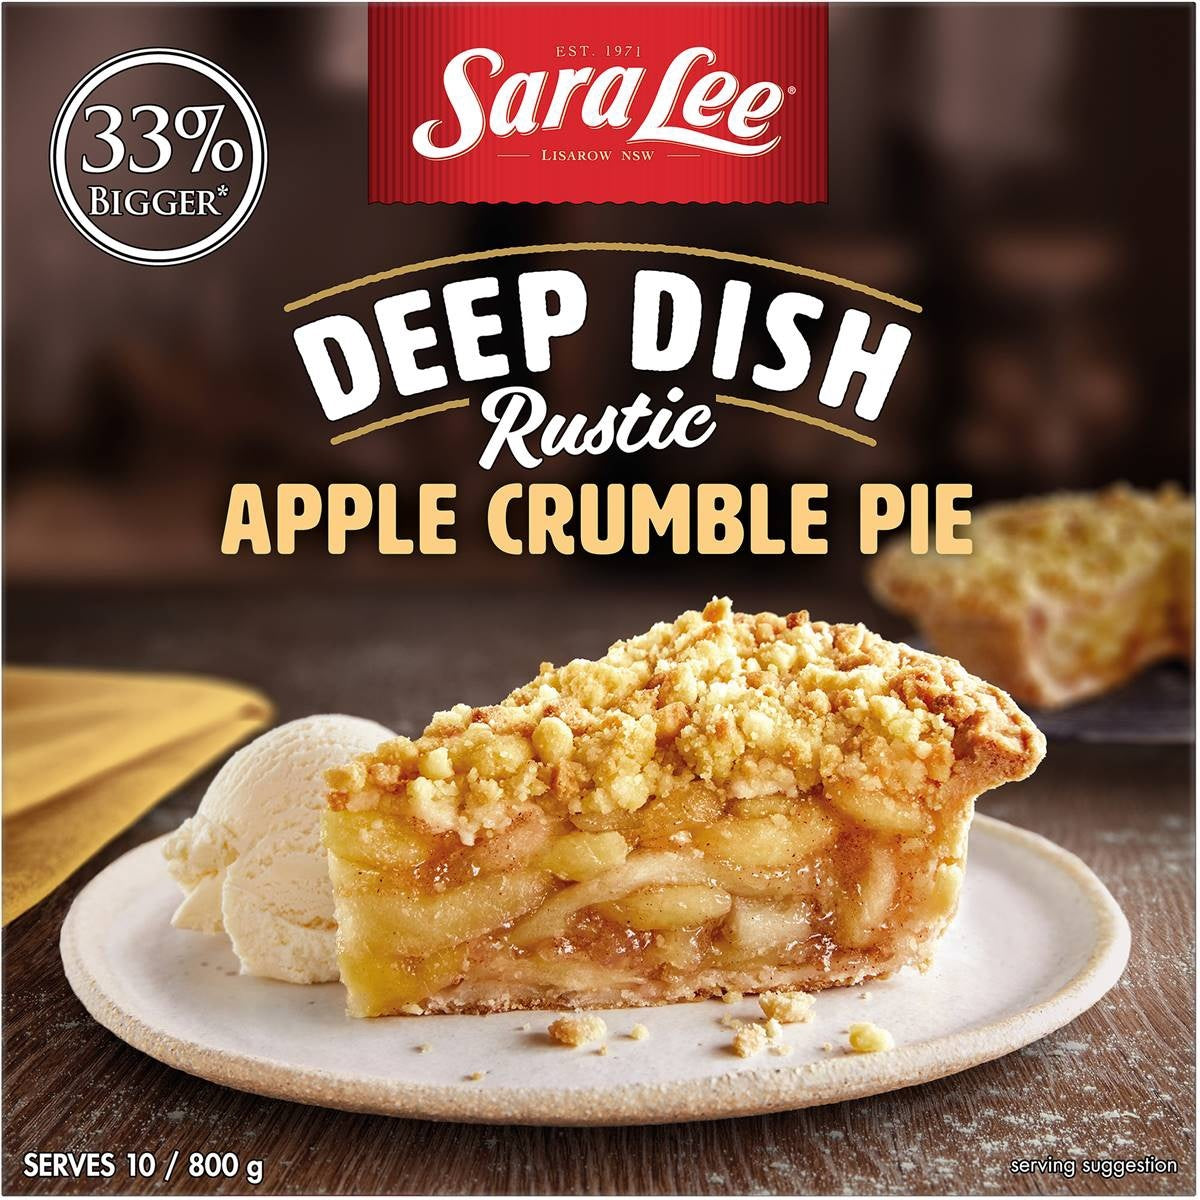 Sara Lee Apple Crumble Pie Deep Dish Rustic 800g